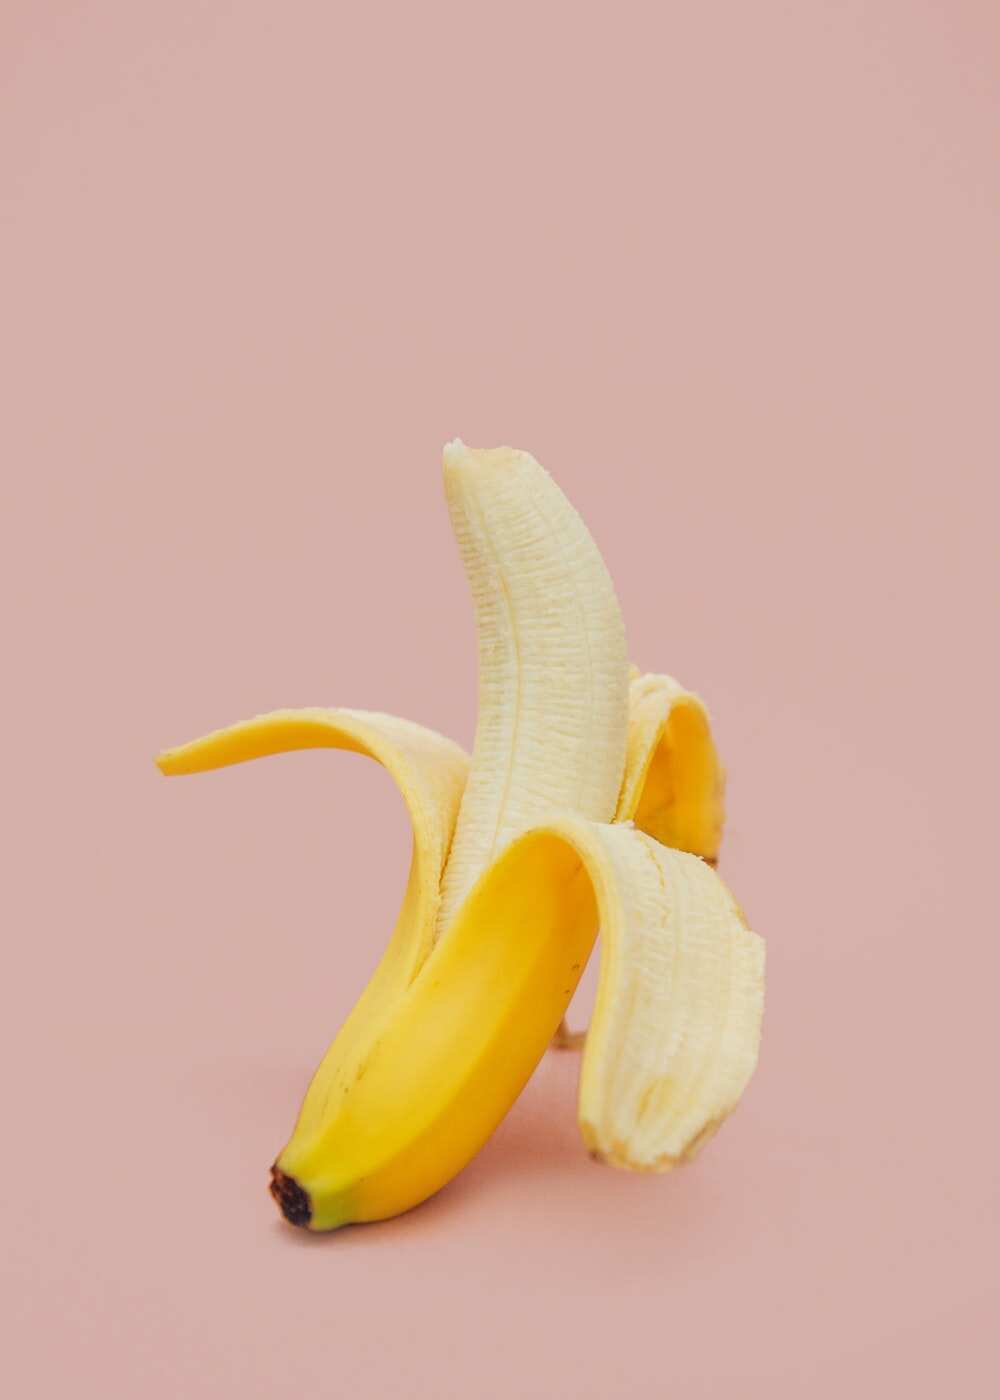 Bananas during pregnancy